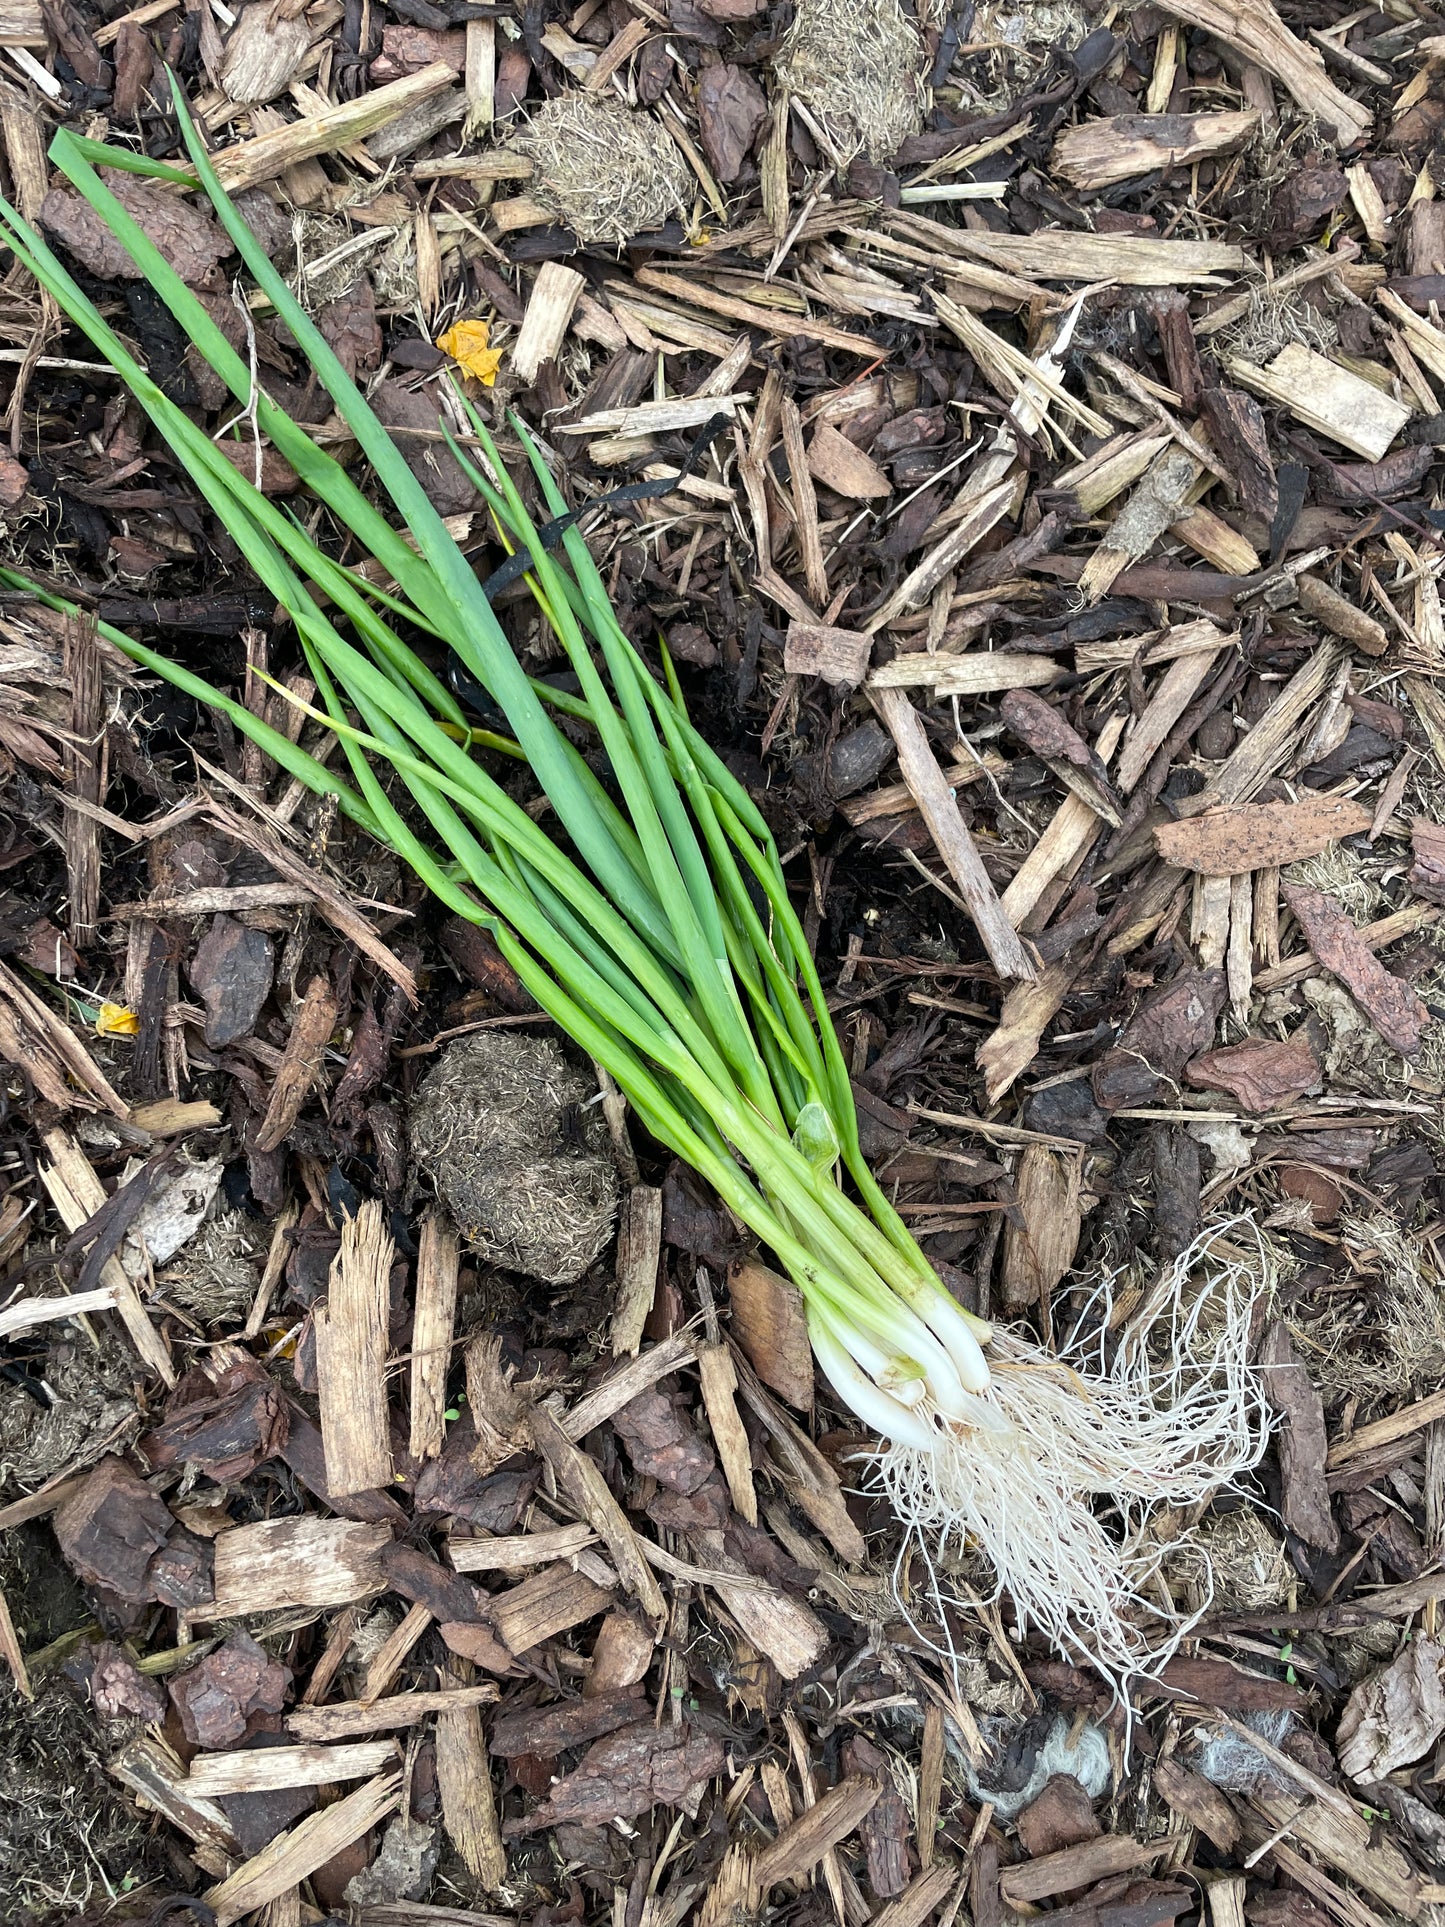 Organic Spring Onions